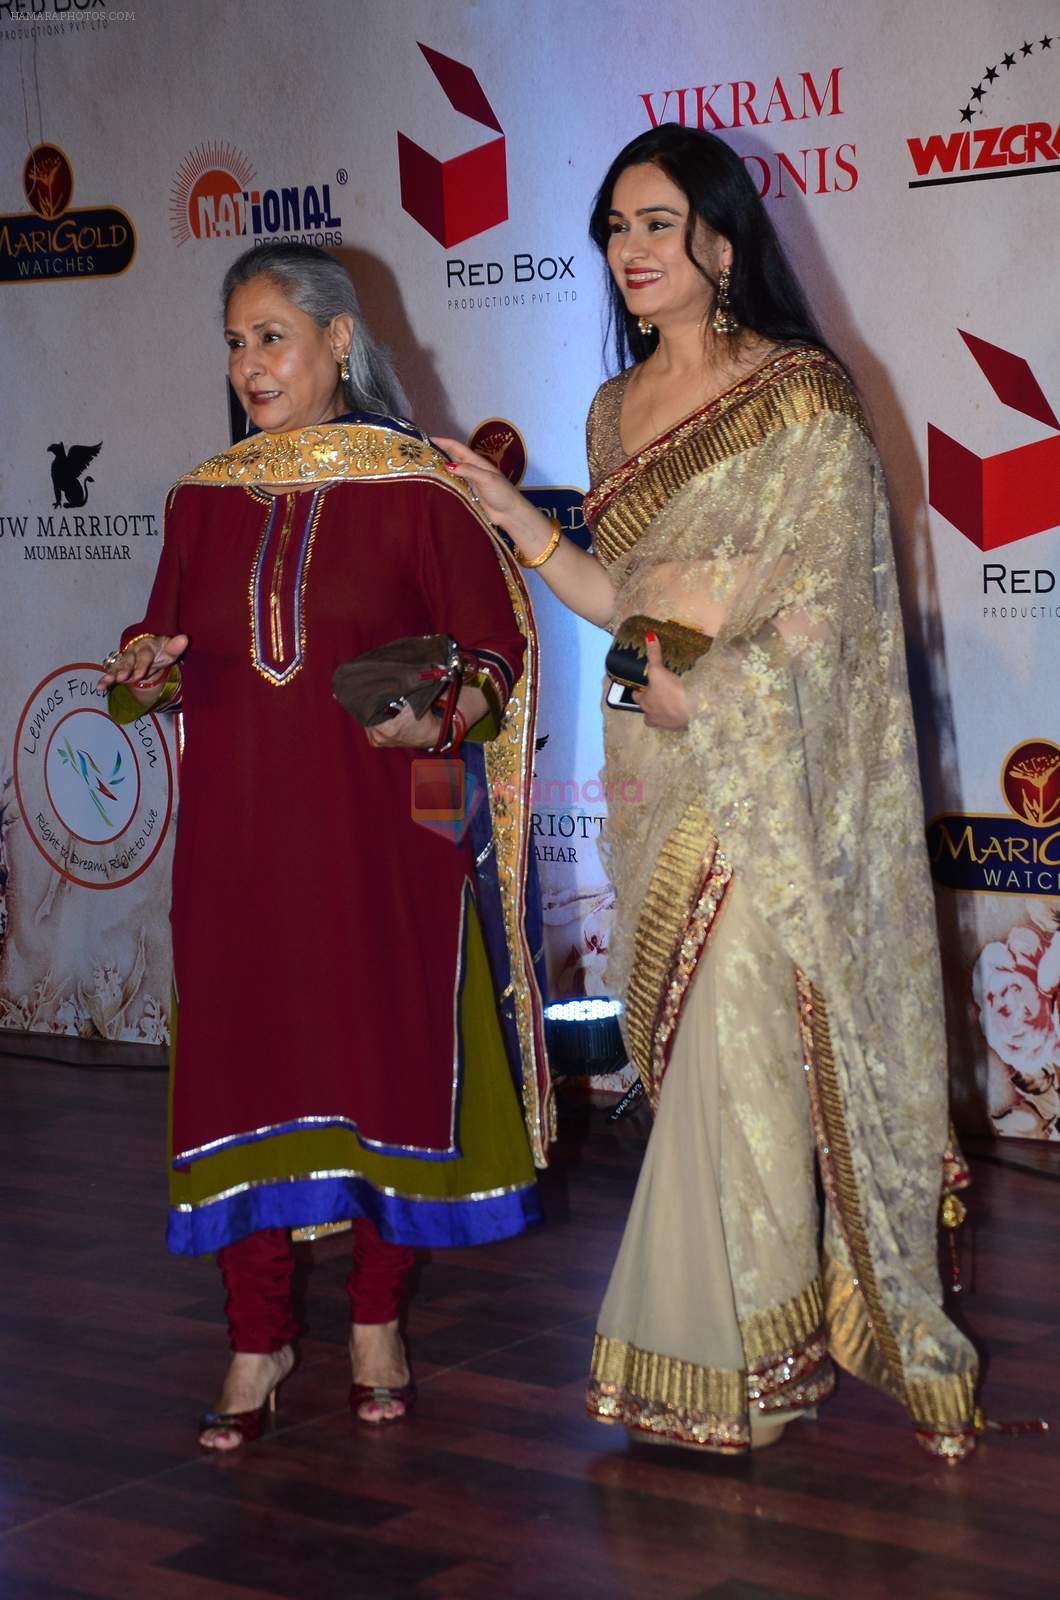 Jaya Bachchan at Vikram Phadnis 25 years show on 16th Jan 2016